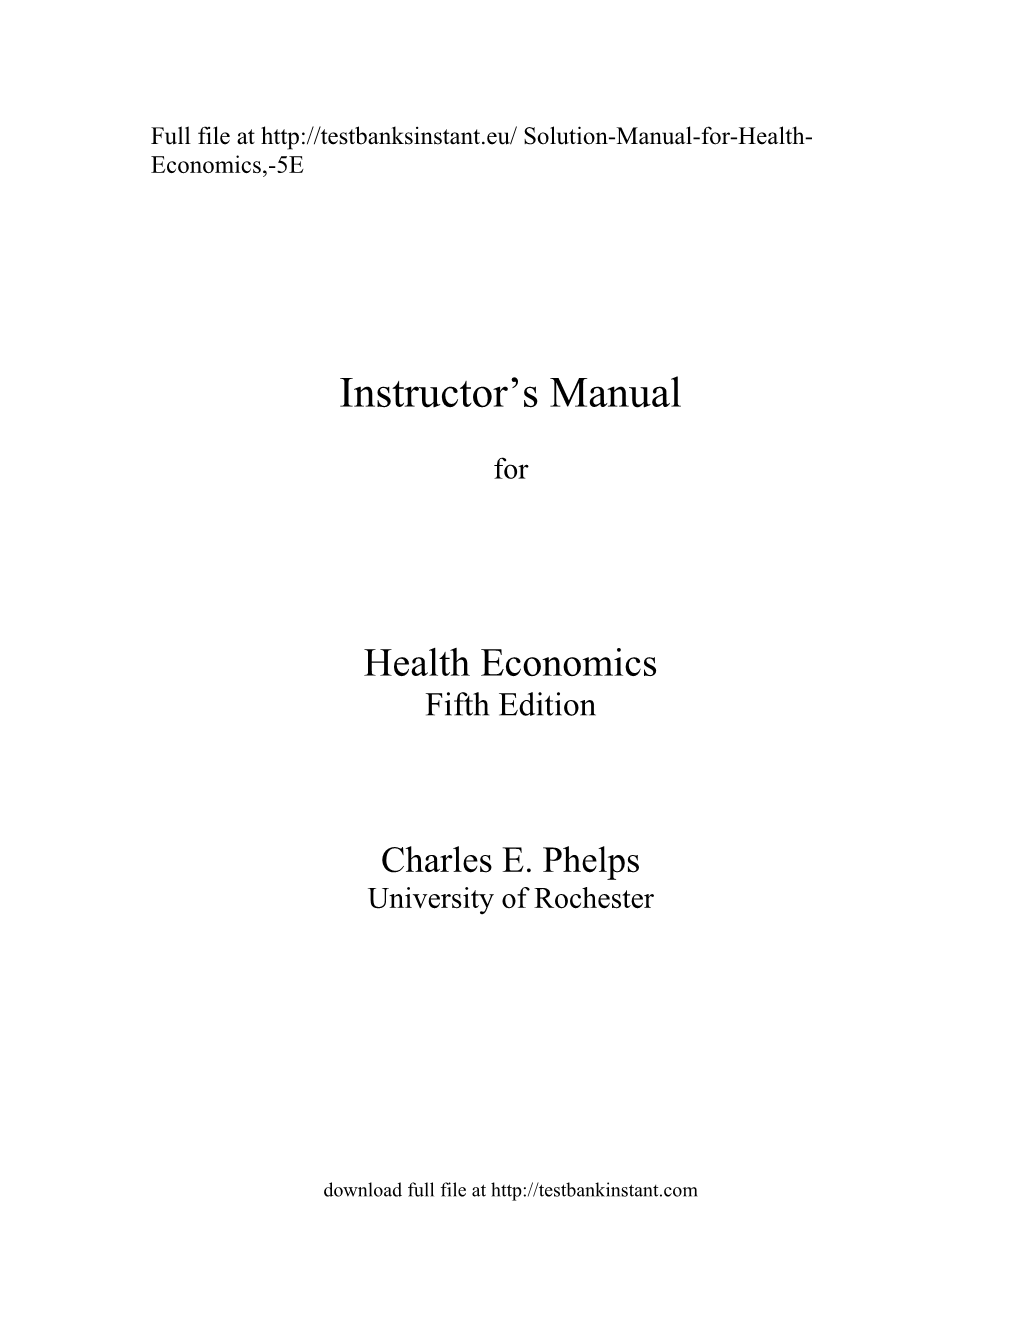 Full File at Solution-Manual-For-Health-Economics,-5E